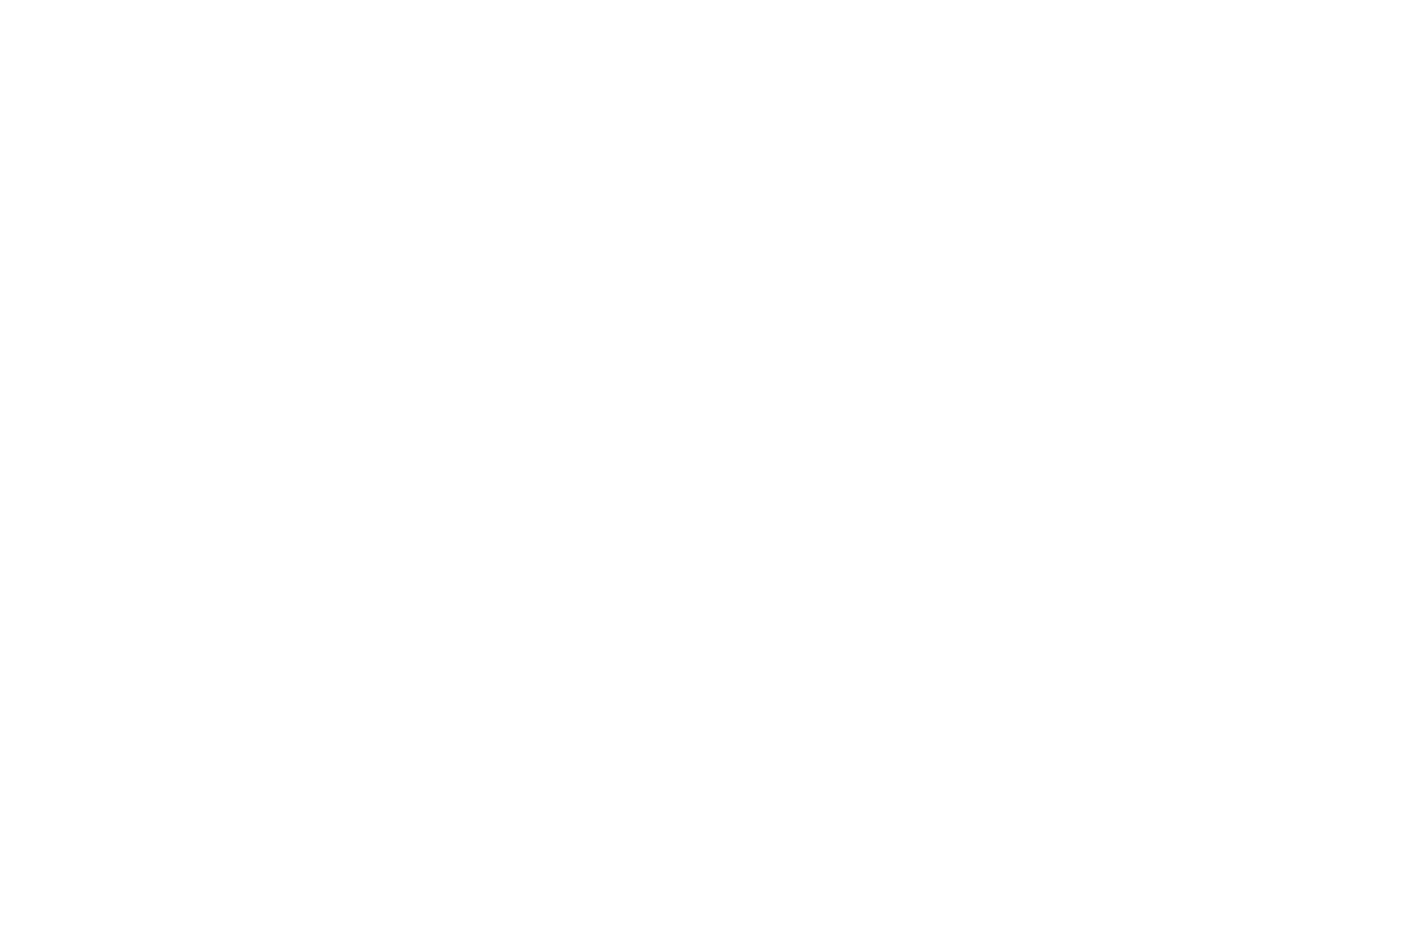 JK support